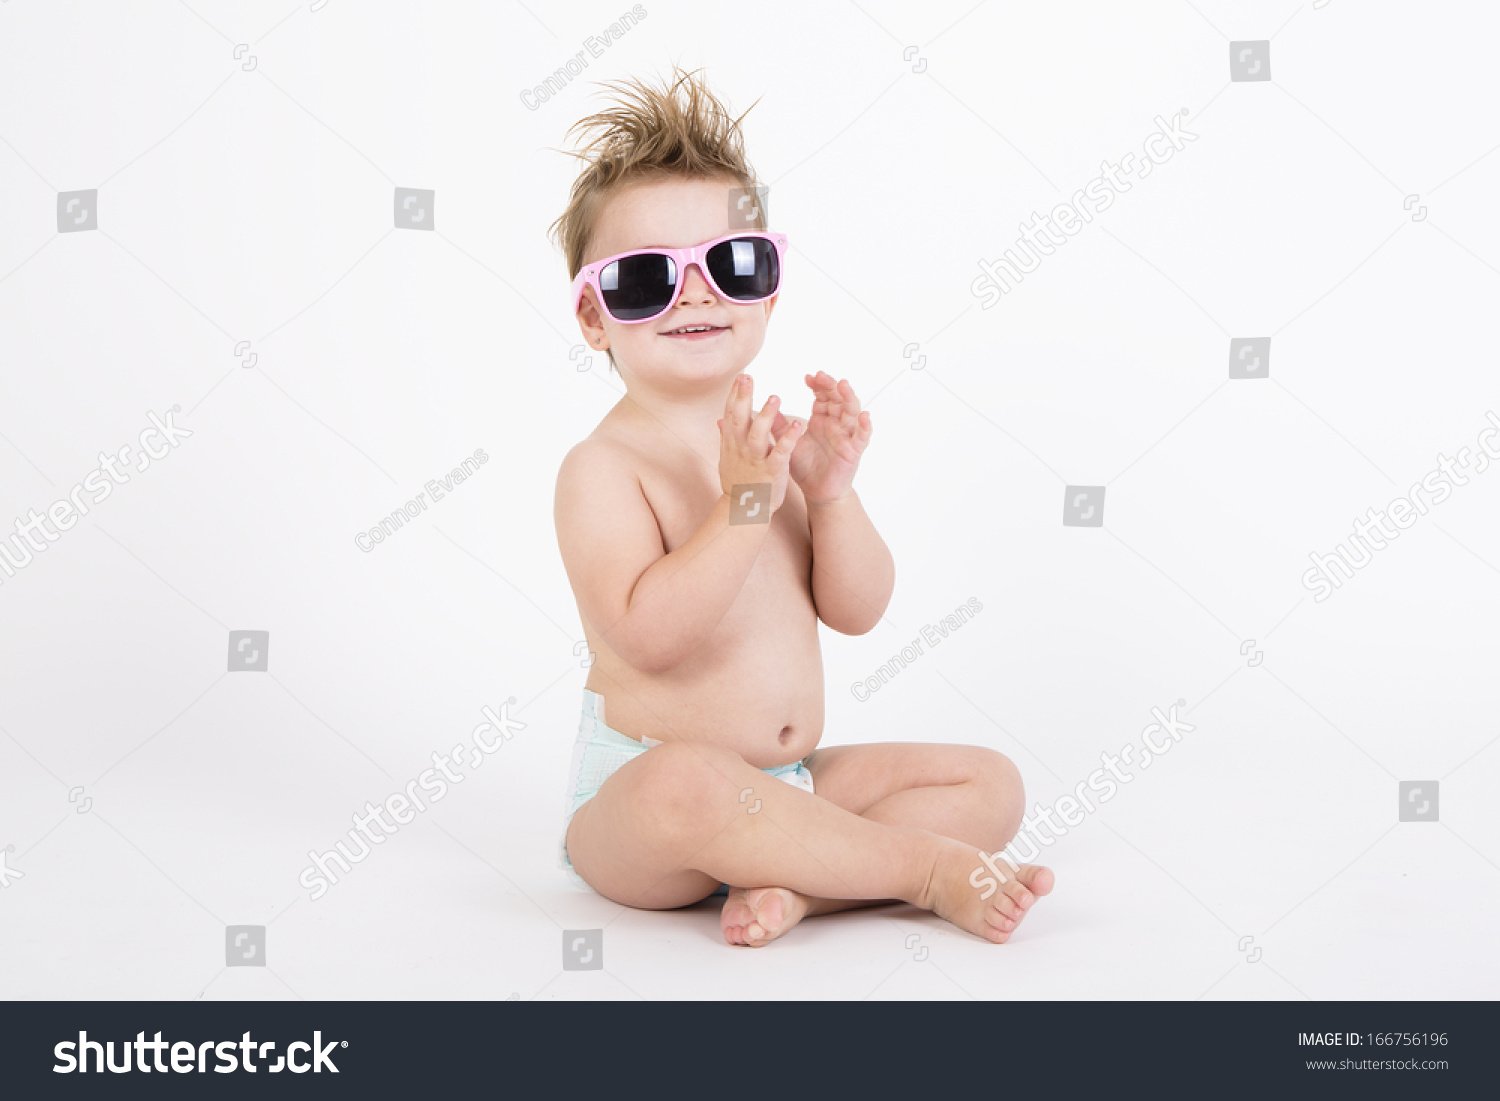 disheveled girl smiling wearing sunglasses with withe background #166756196